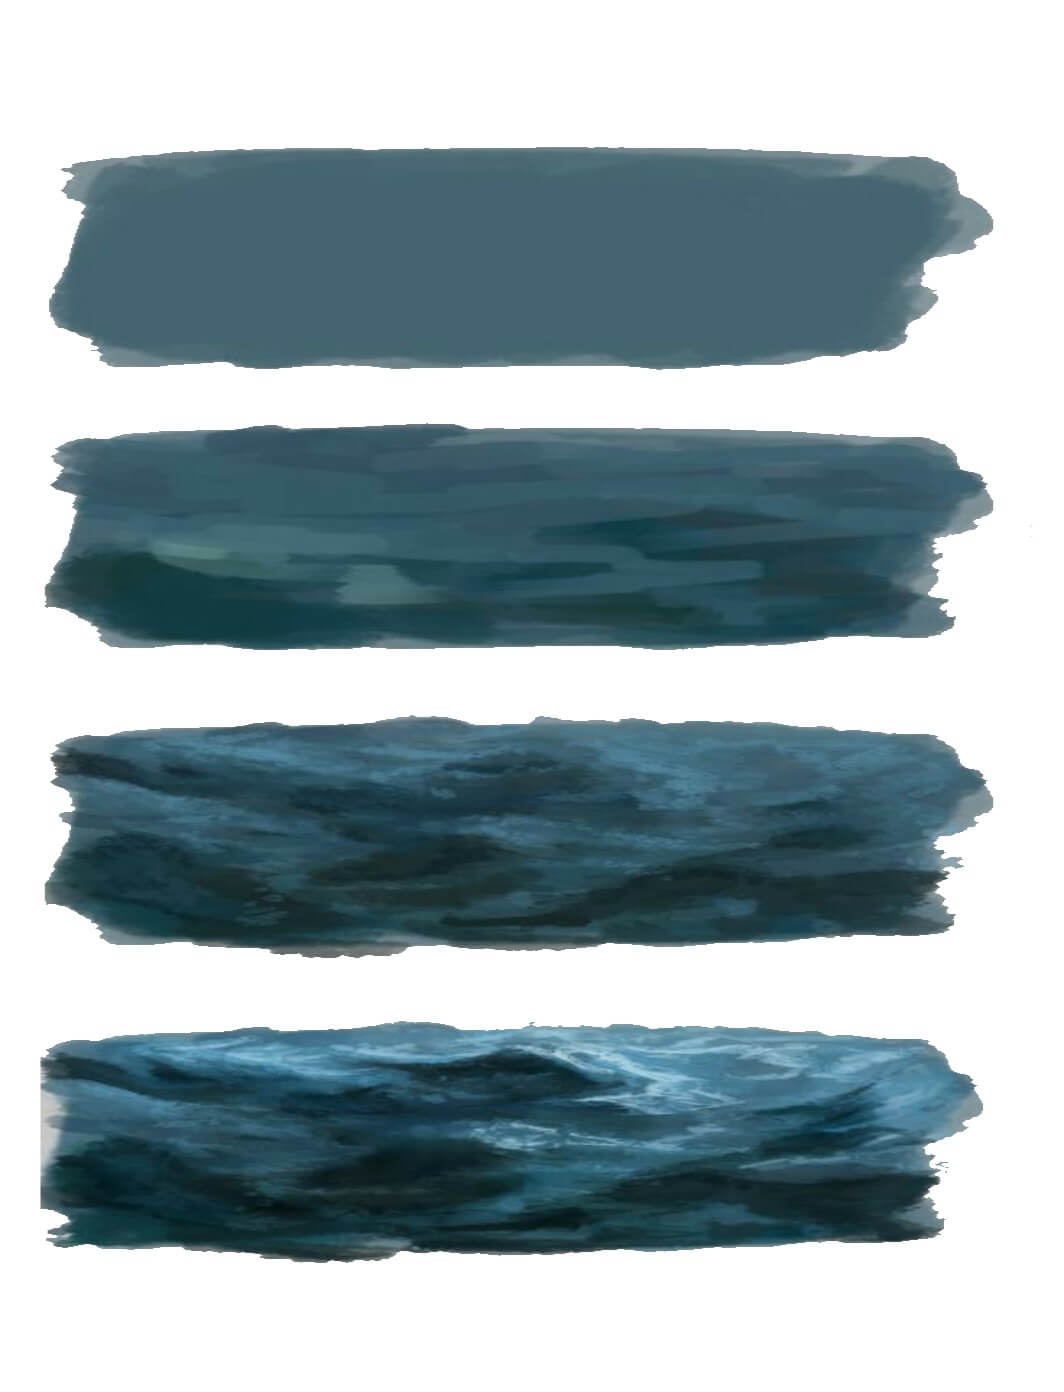 Ocean idea (1) Drawing Ideas